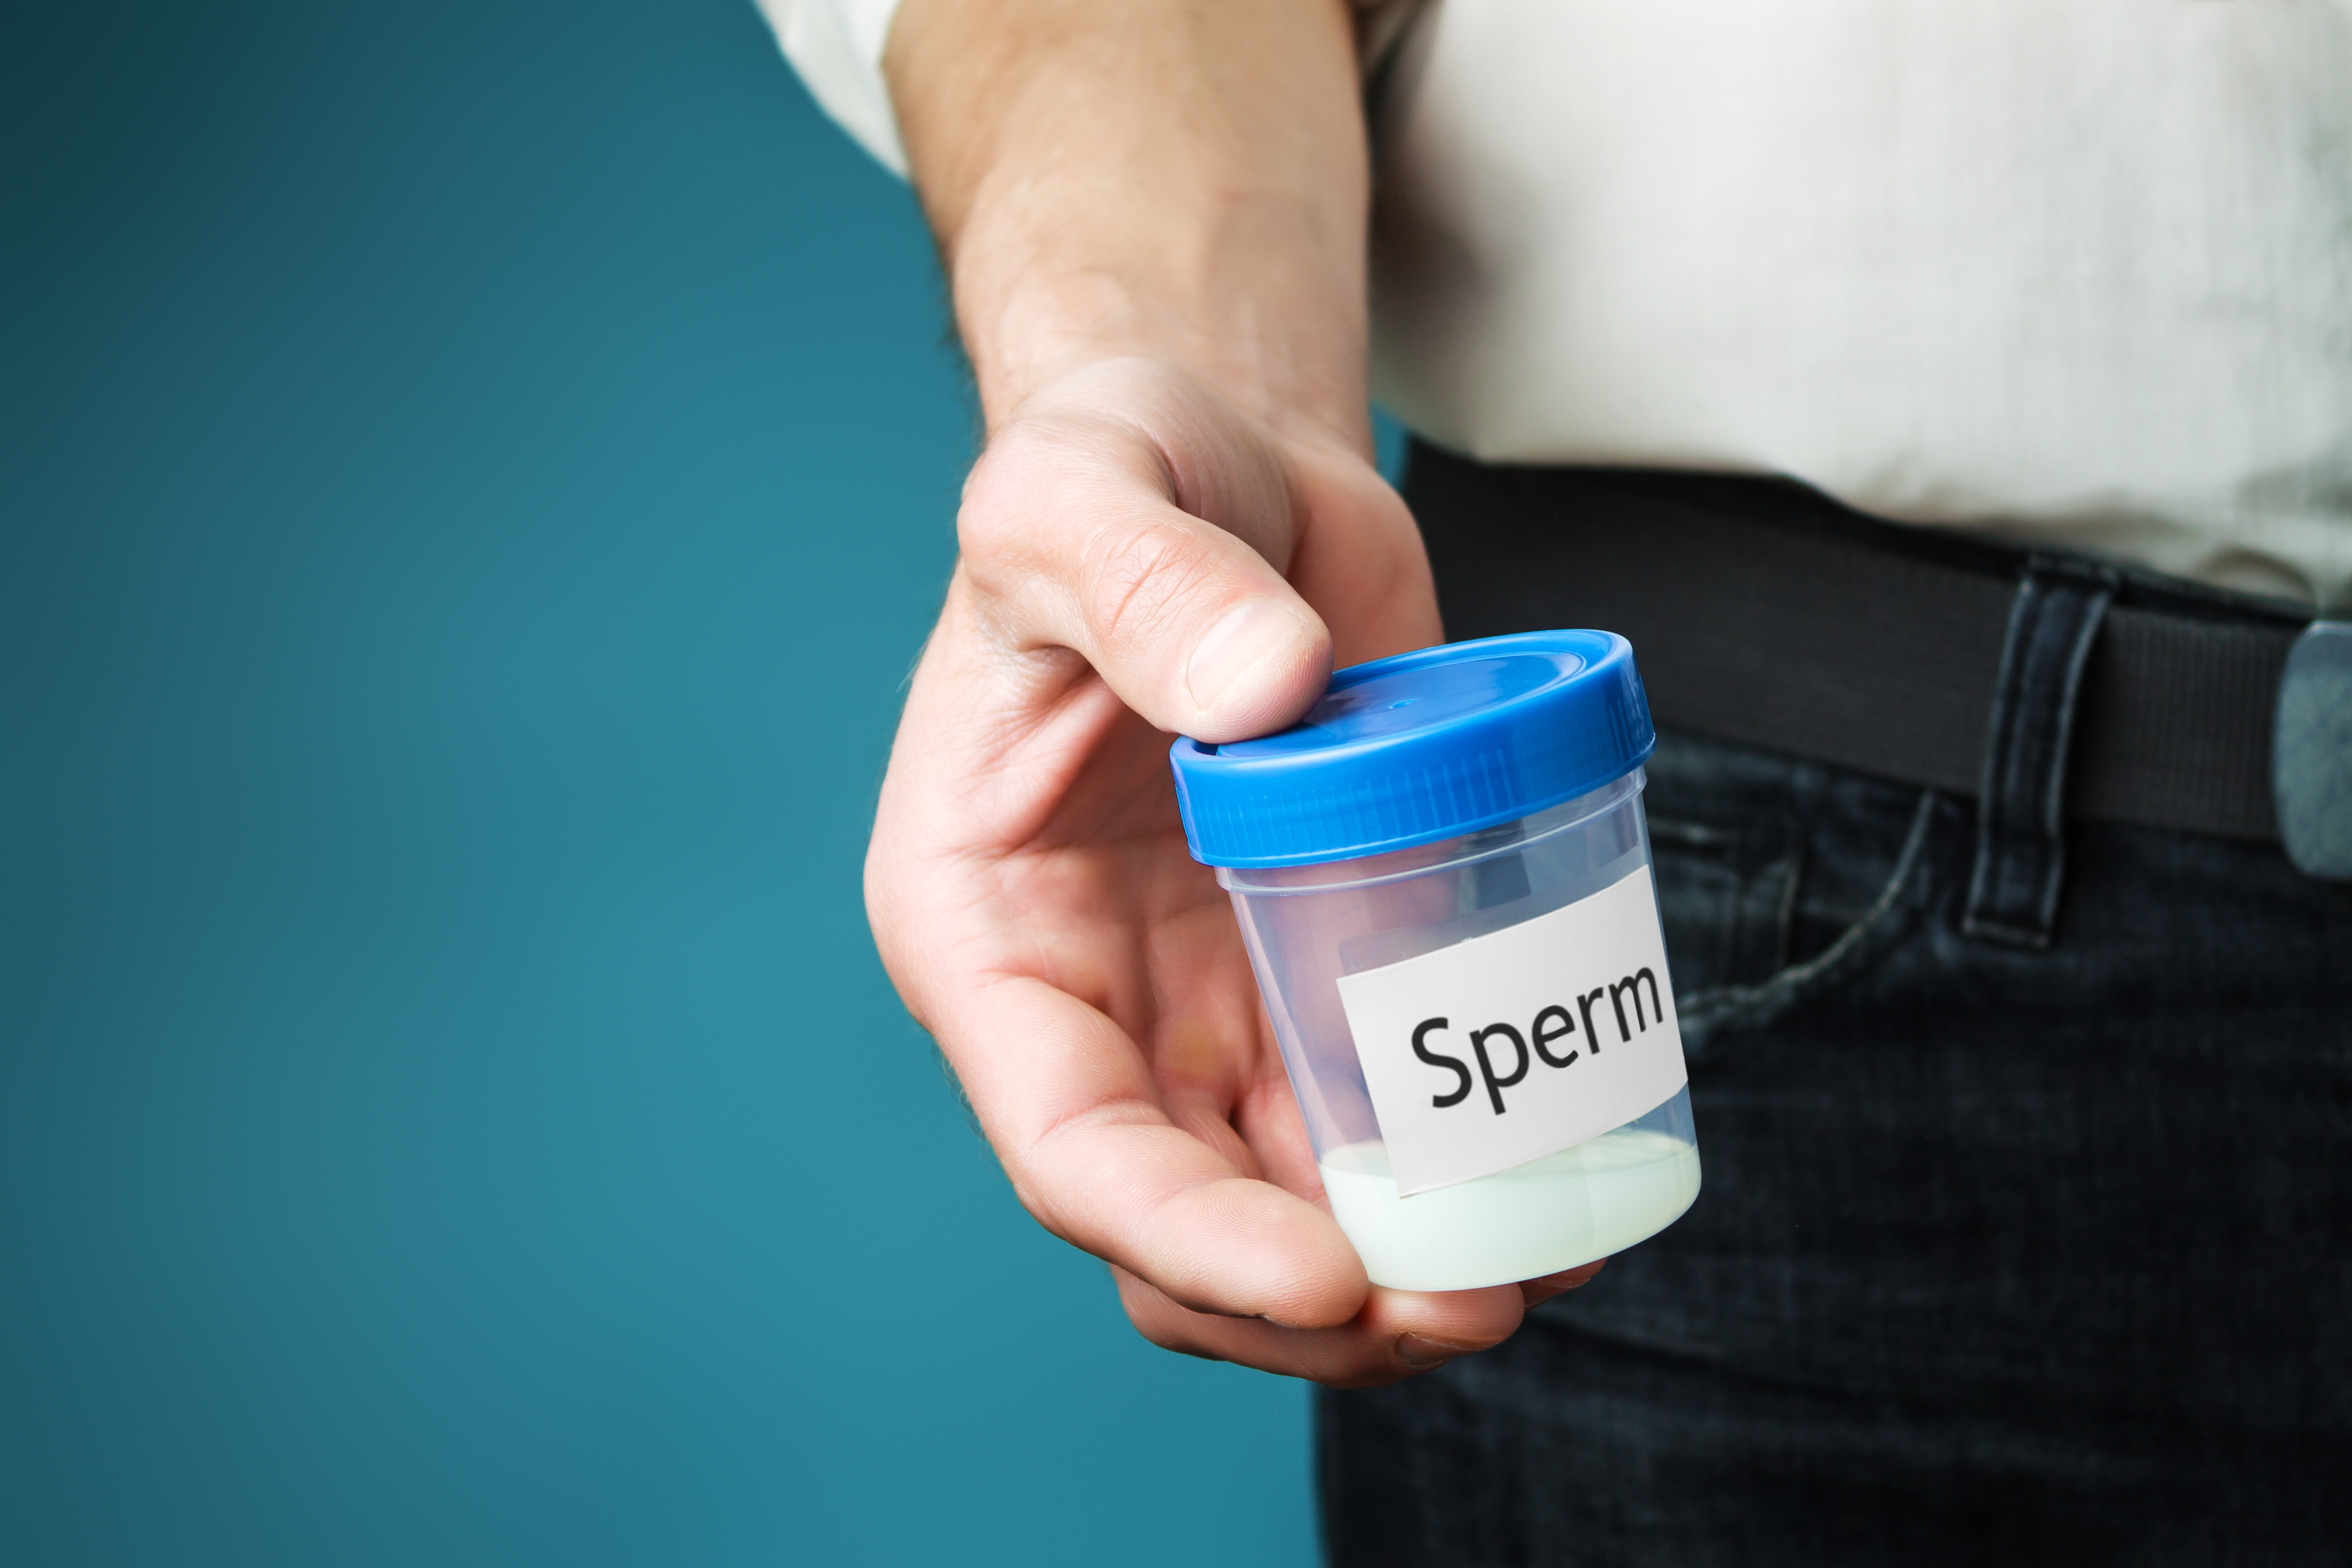 Male Infertility Testing With Spermcheck Fertility Test 0204